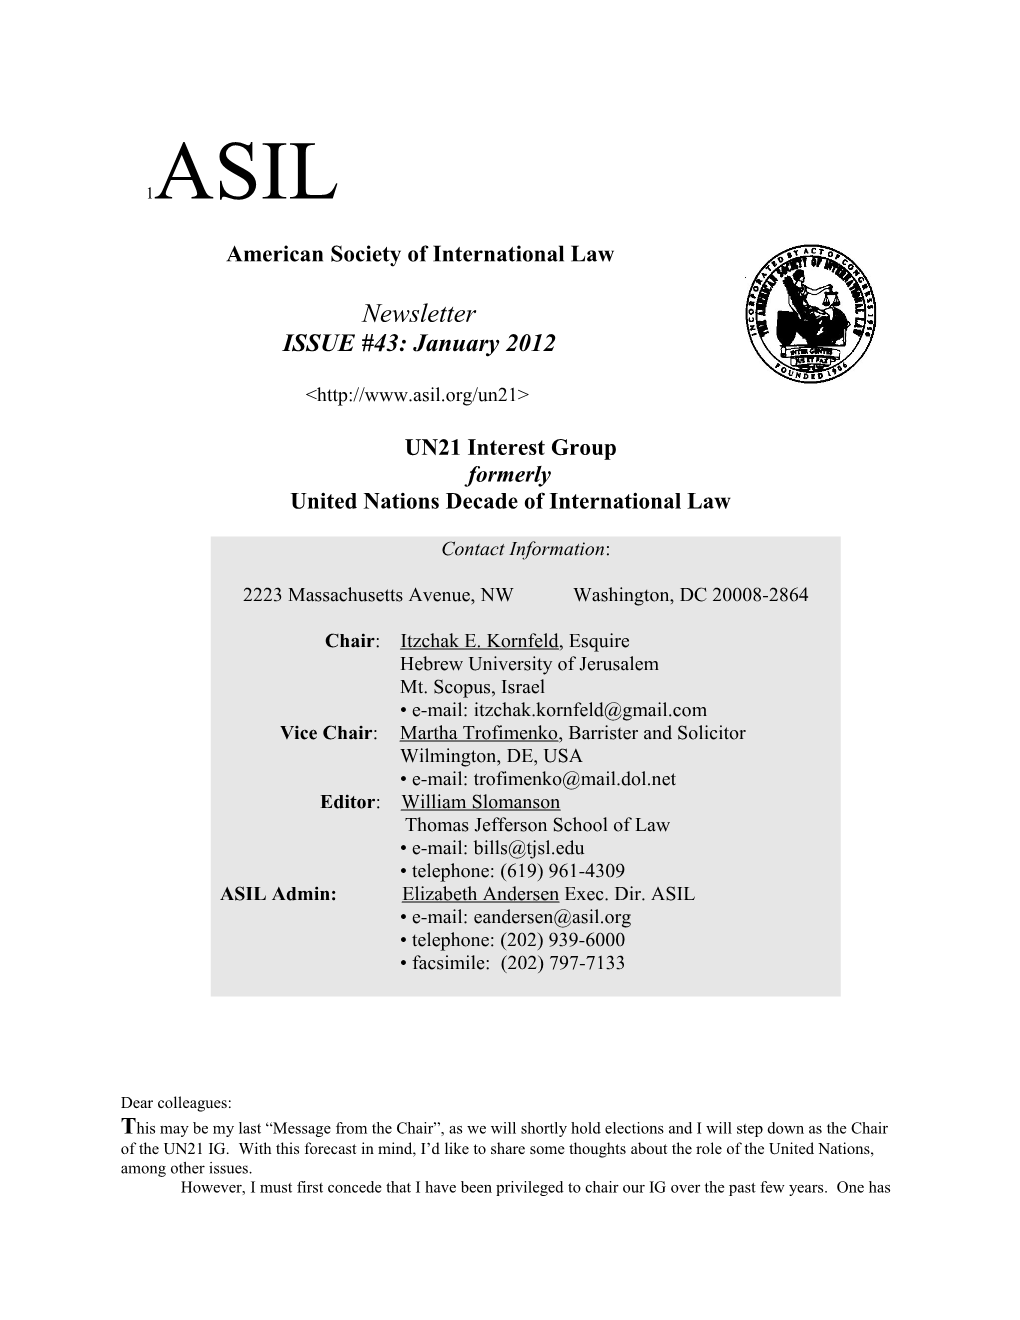 American Society of International Law